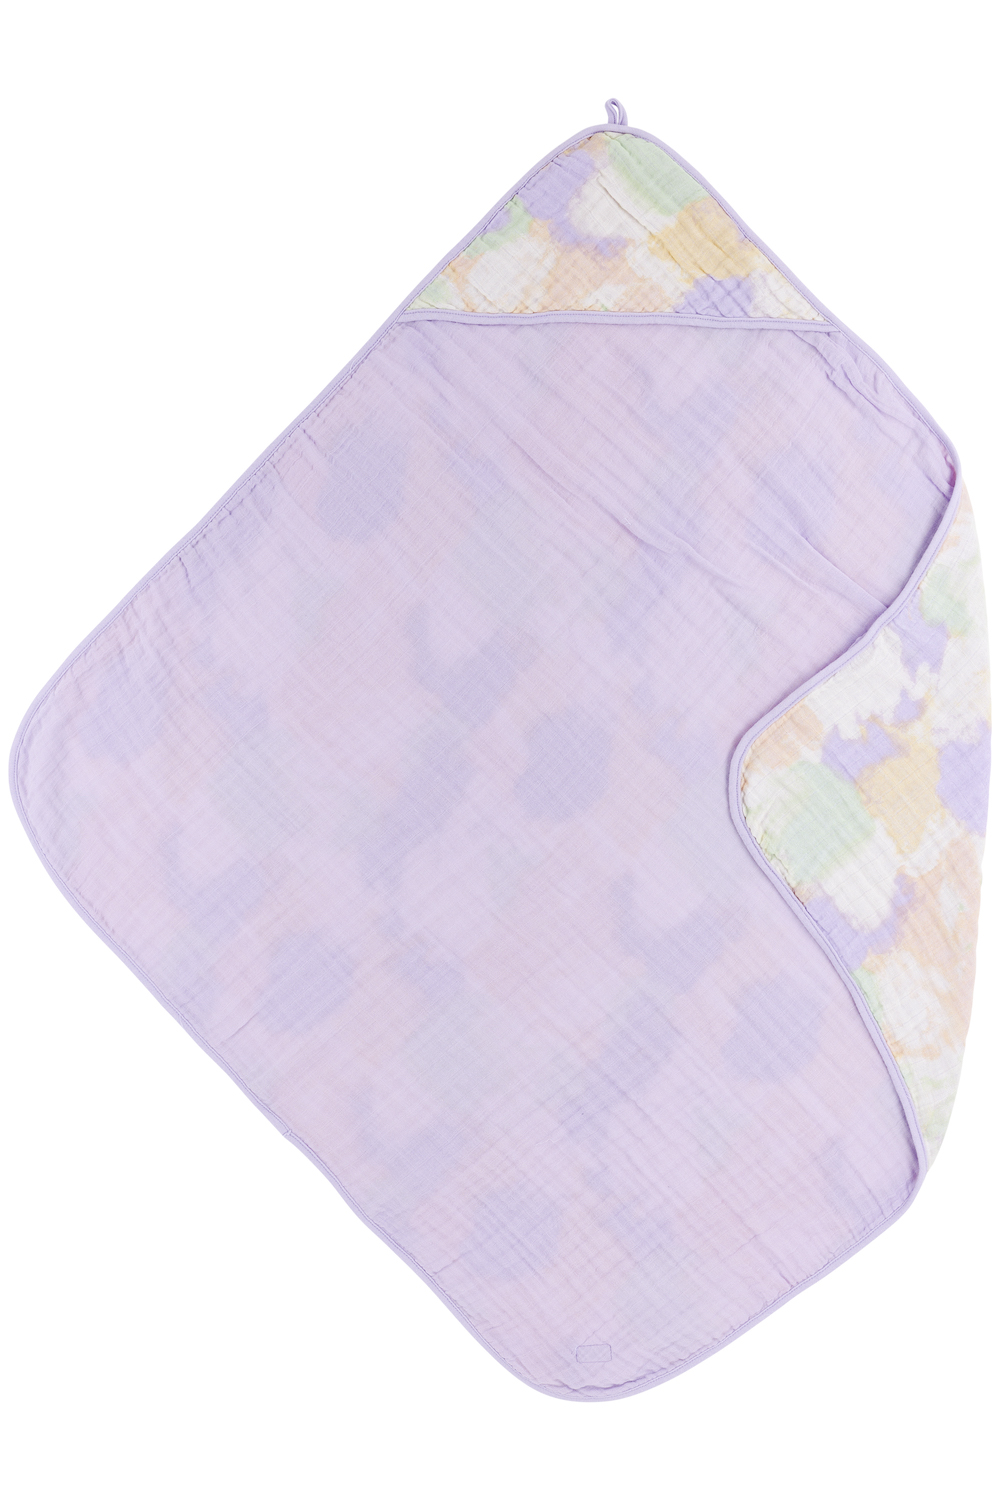 Muslin Bathcape Tie-dye - Soft Lilac - 80x80cm